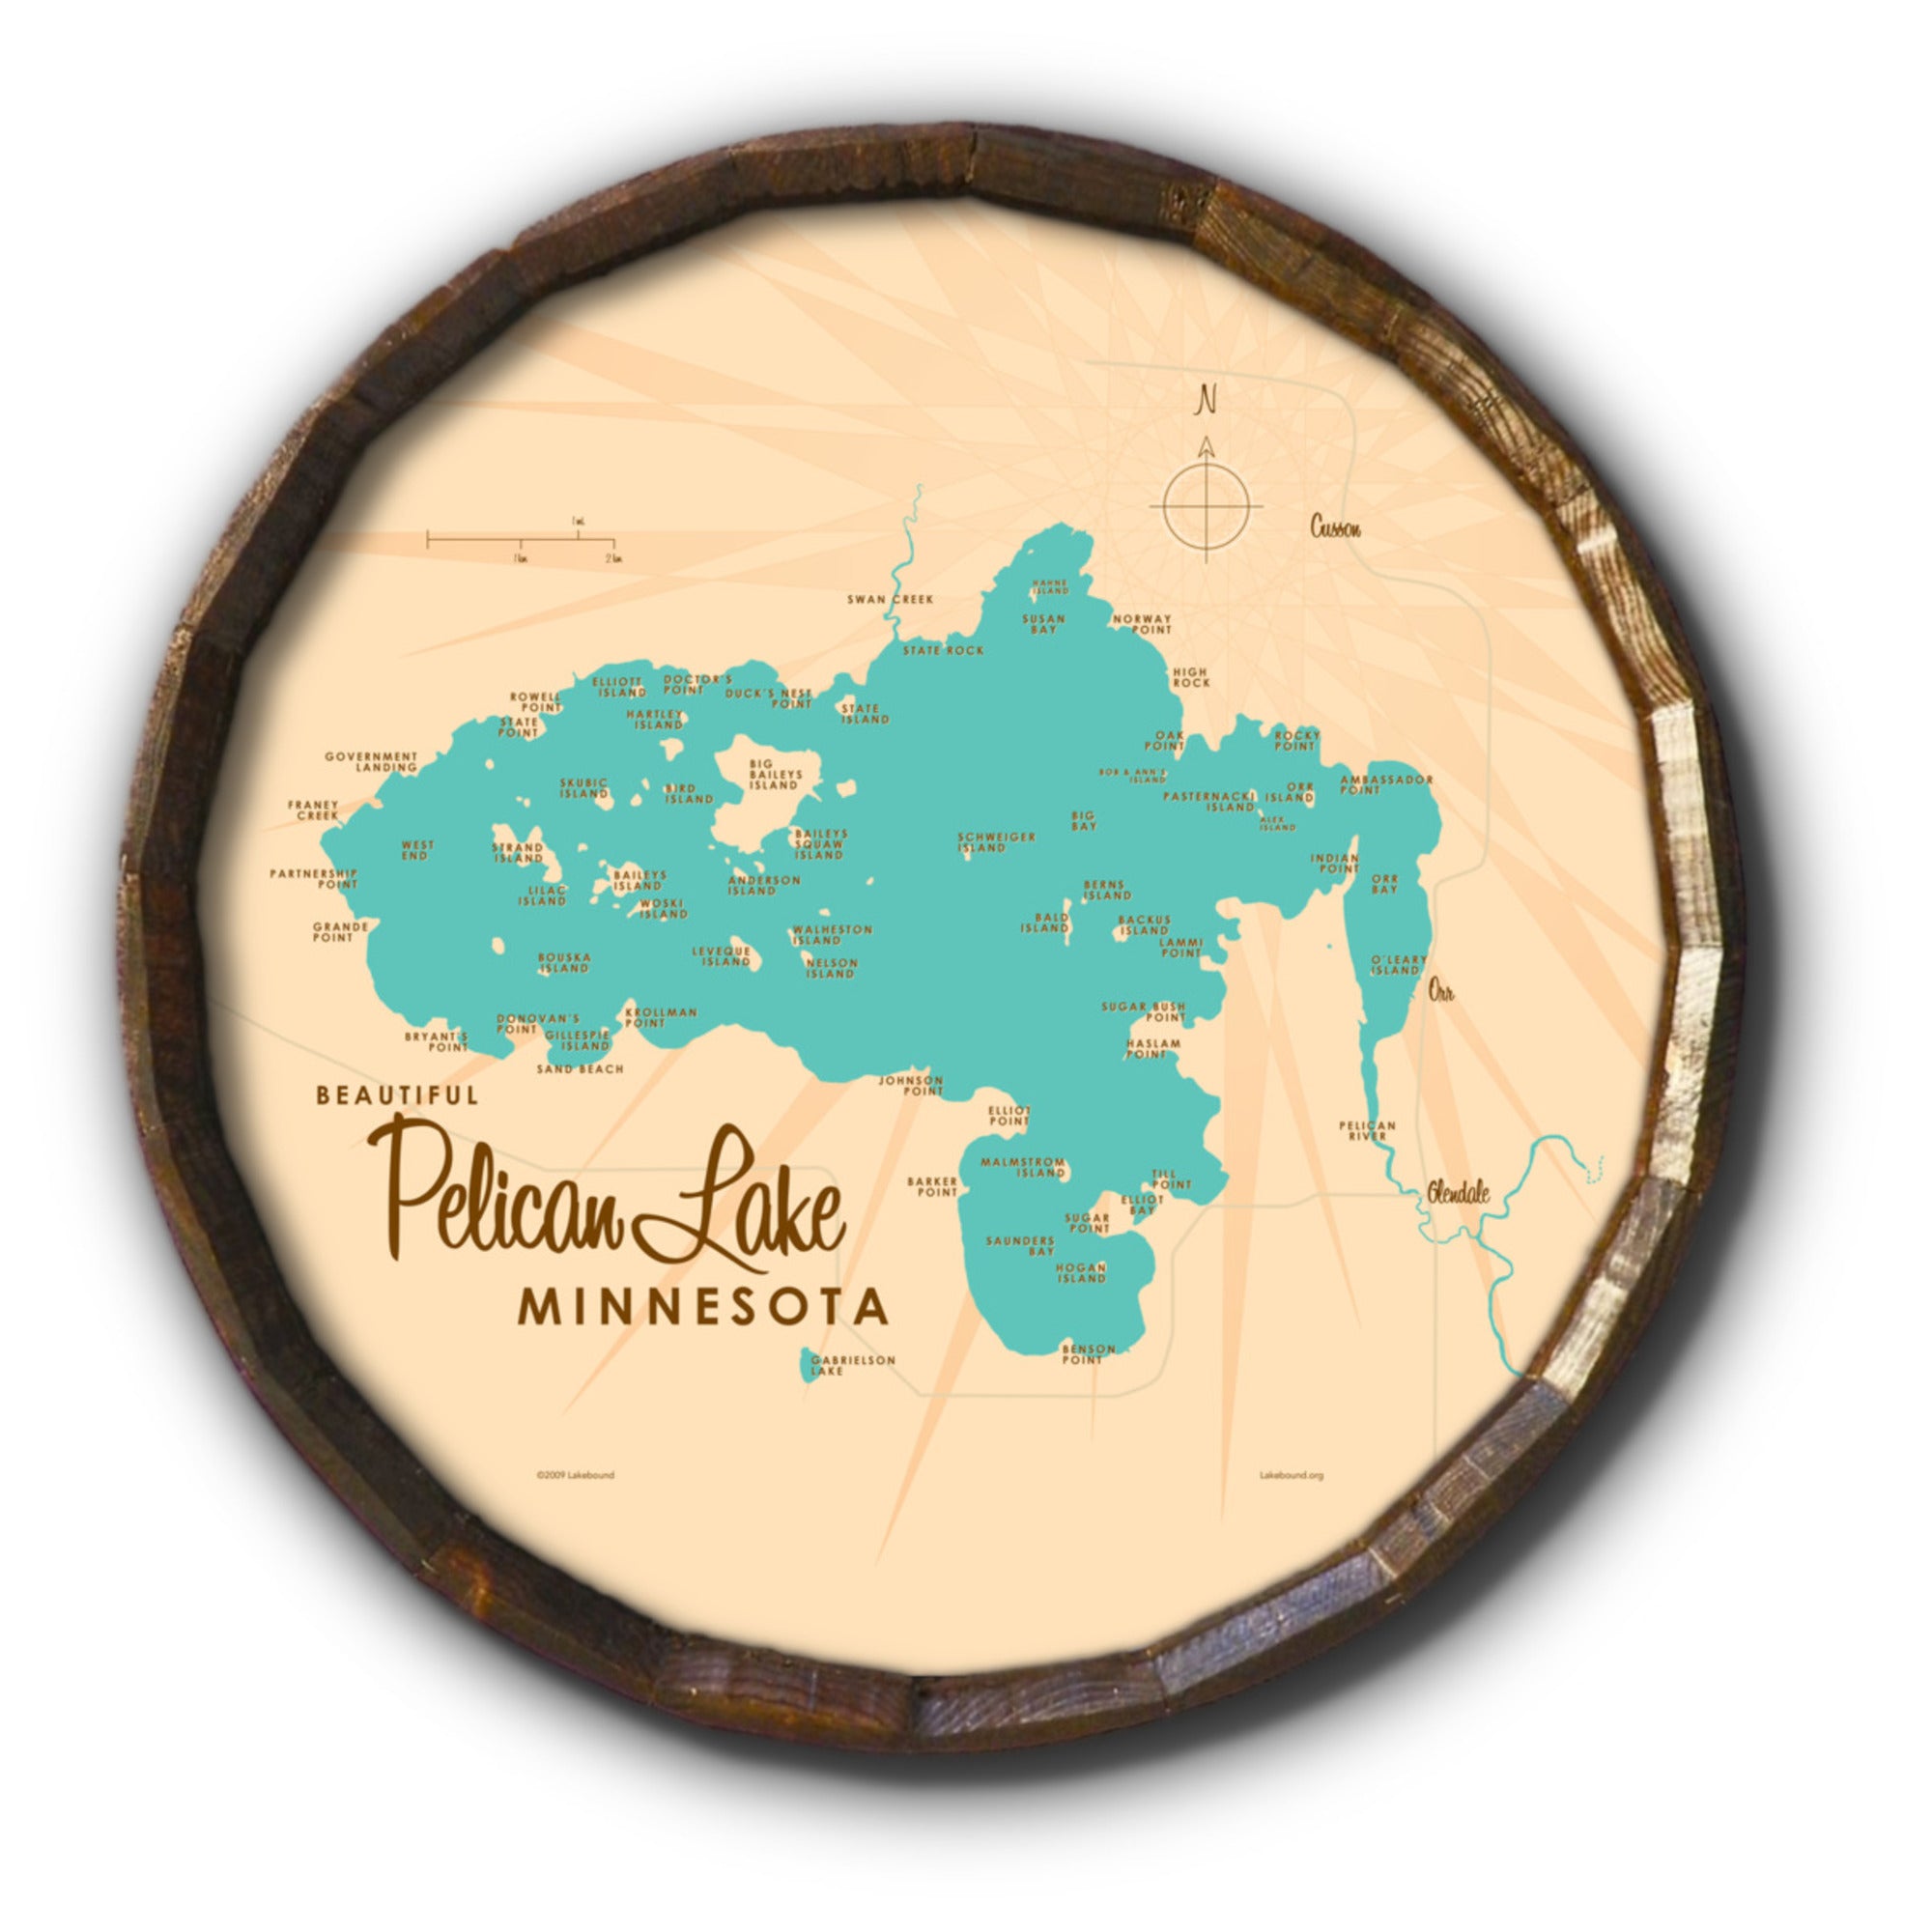 Pelican Lake St. Louis County Minnesota, Barrel End Map Art